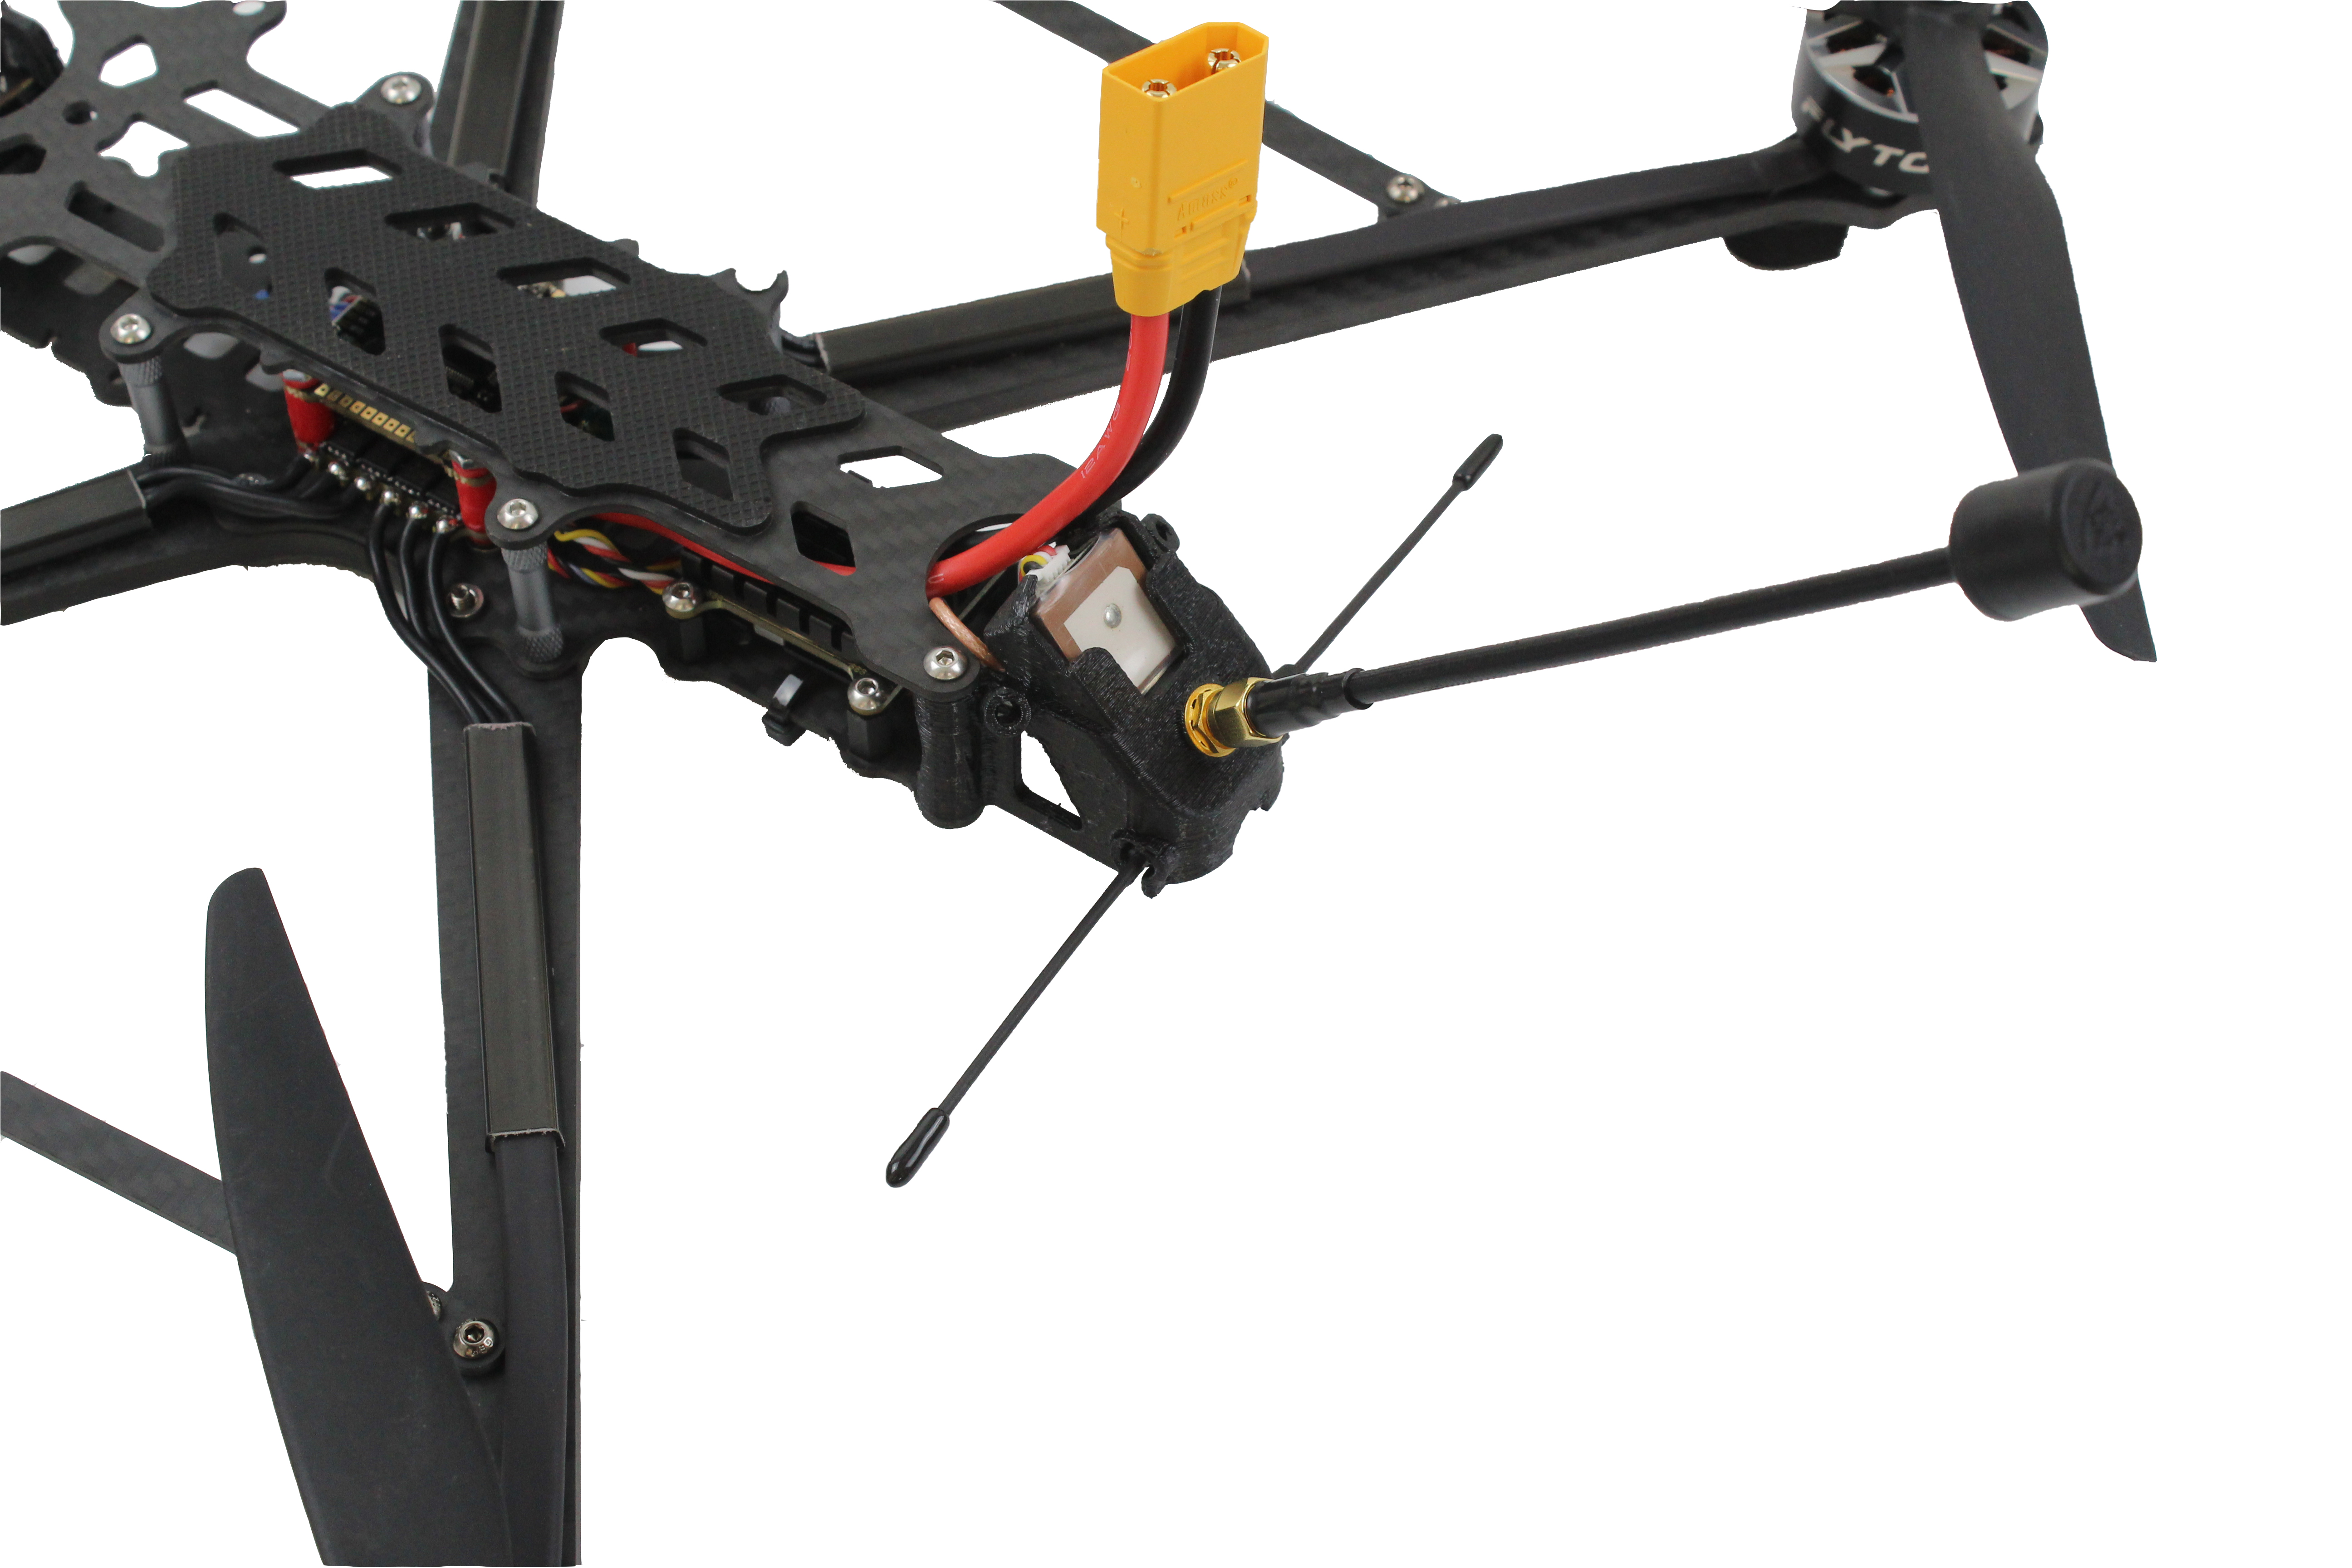  10-inch FPV Drone 2.5w Image Transmission